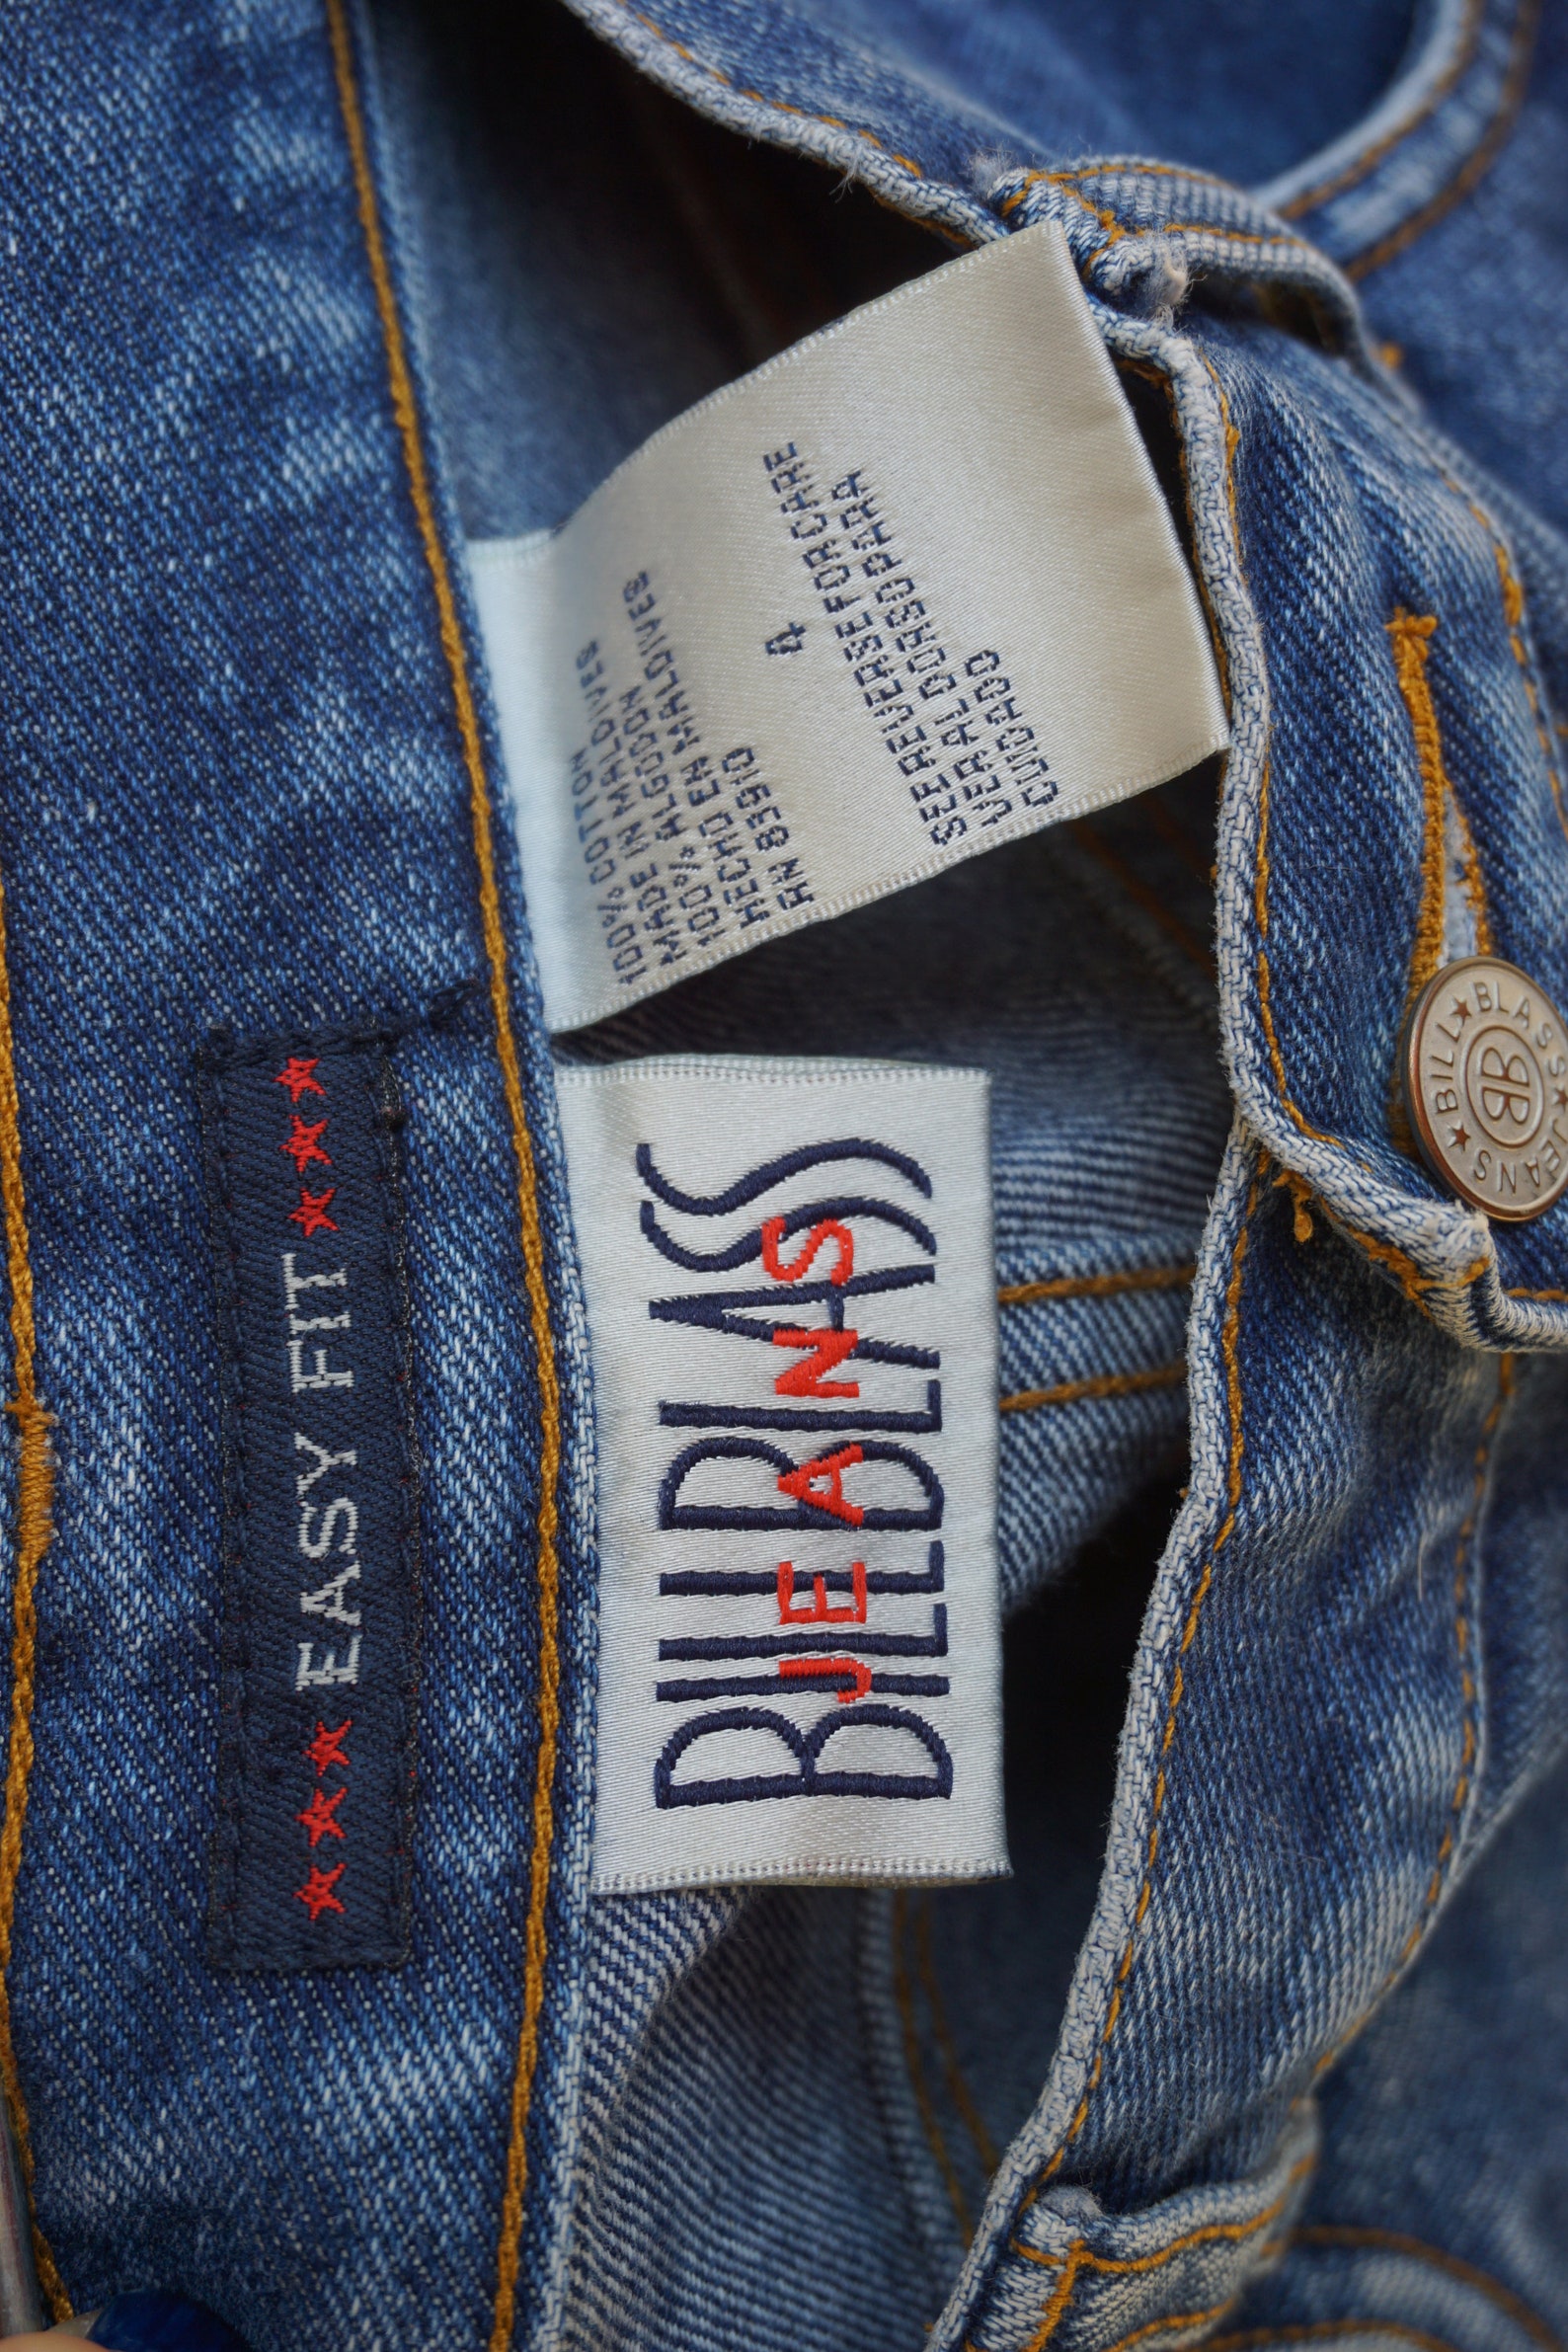 Bill BLass Vintage size 4 Medium high waisted denim jeans | Etsy